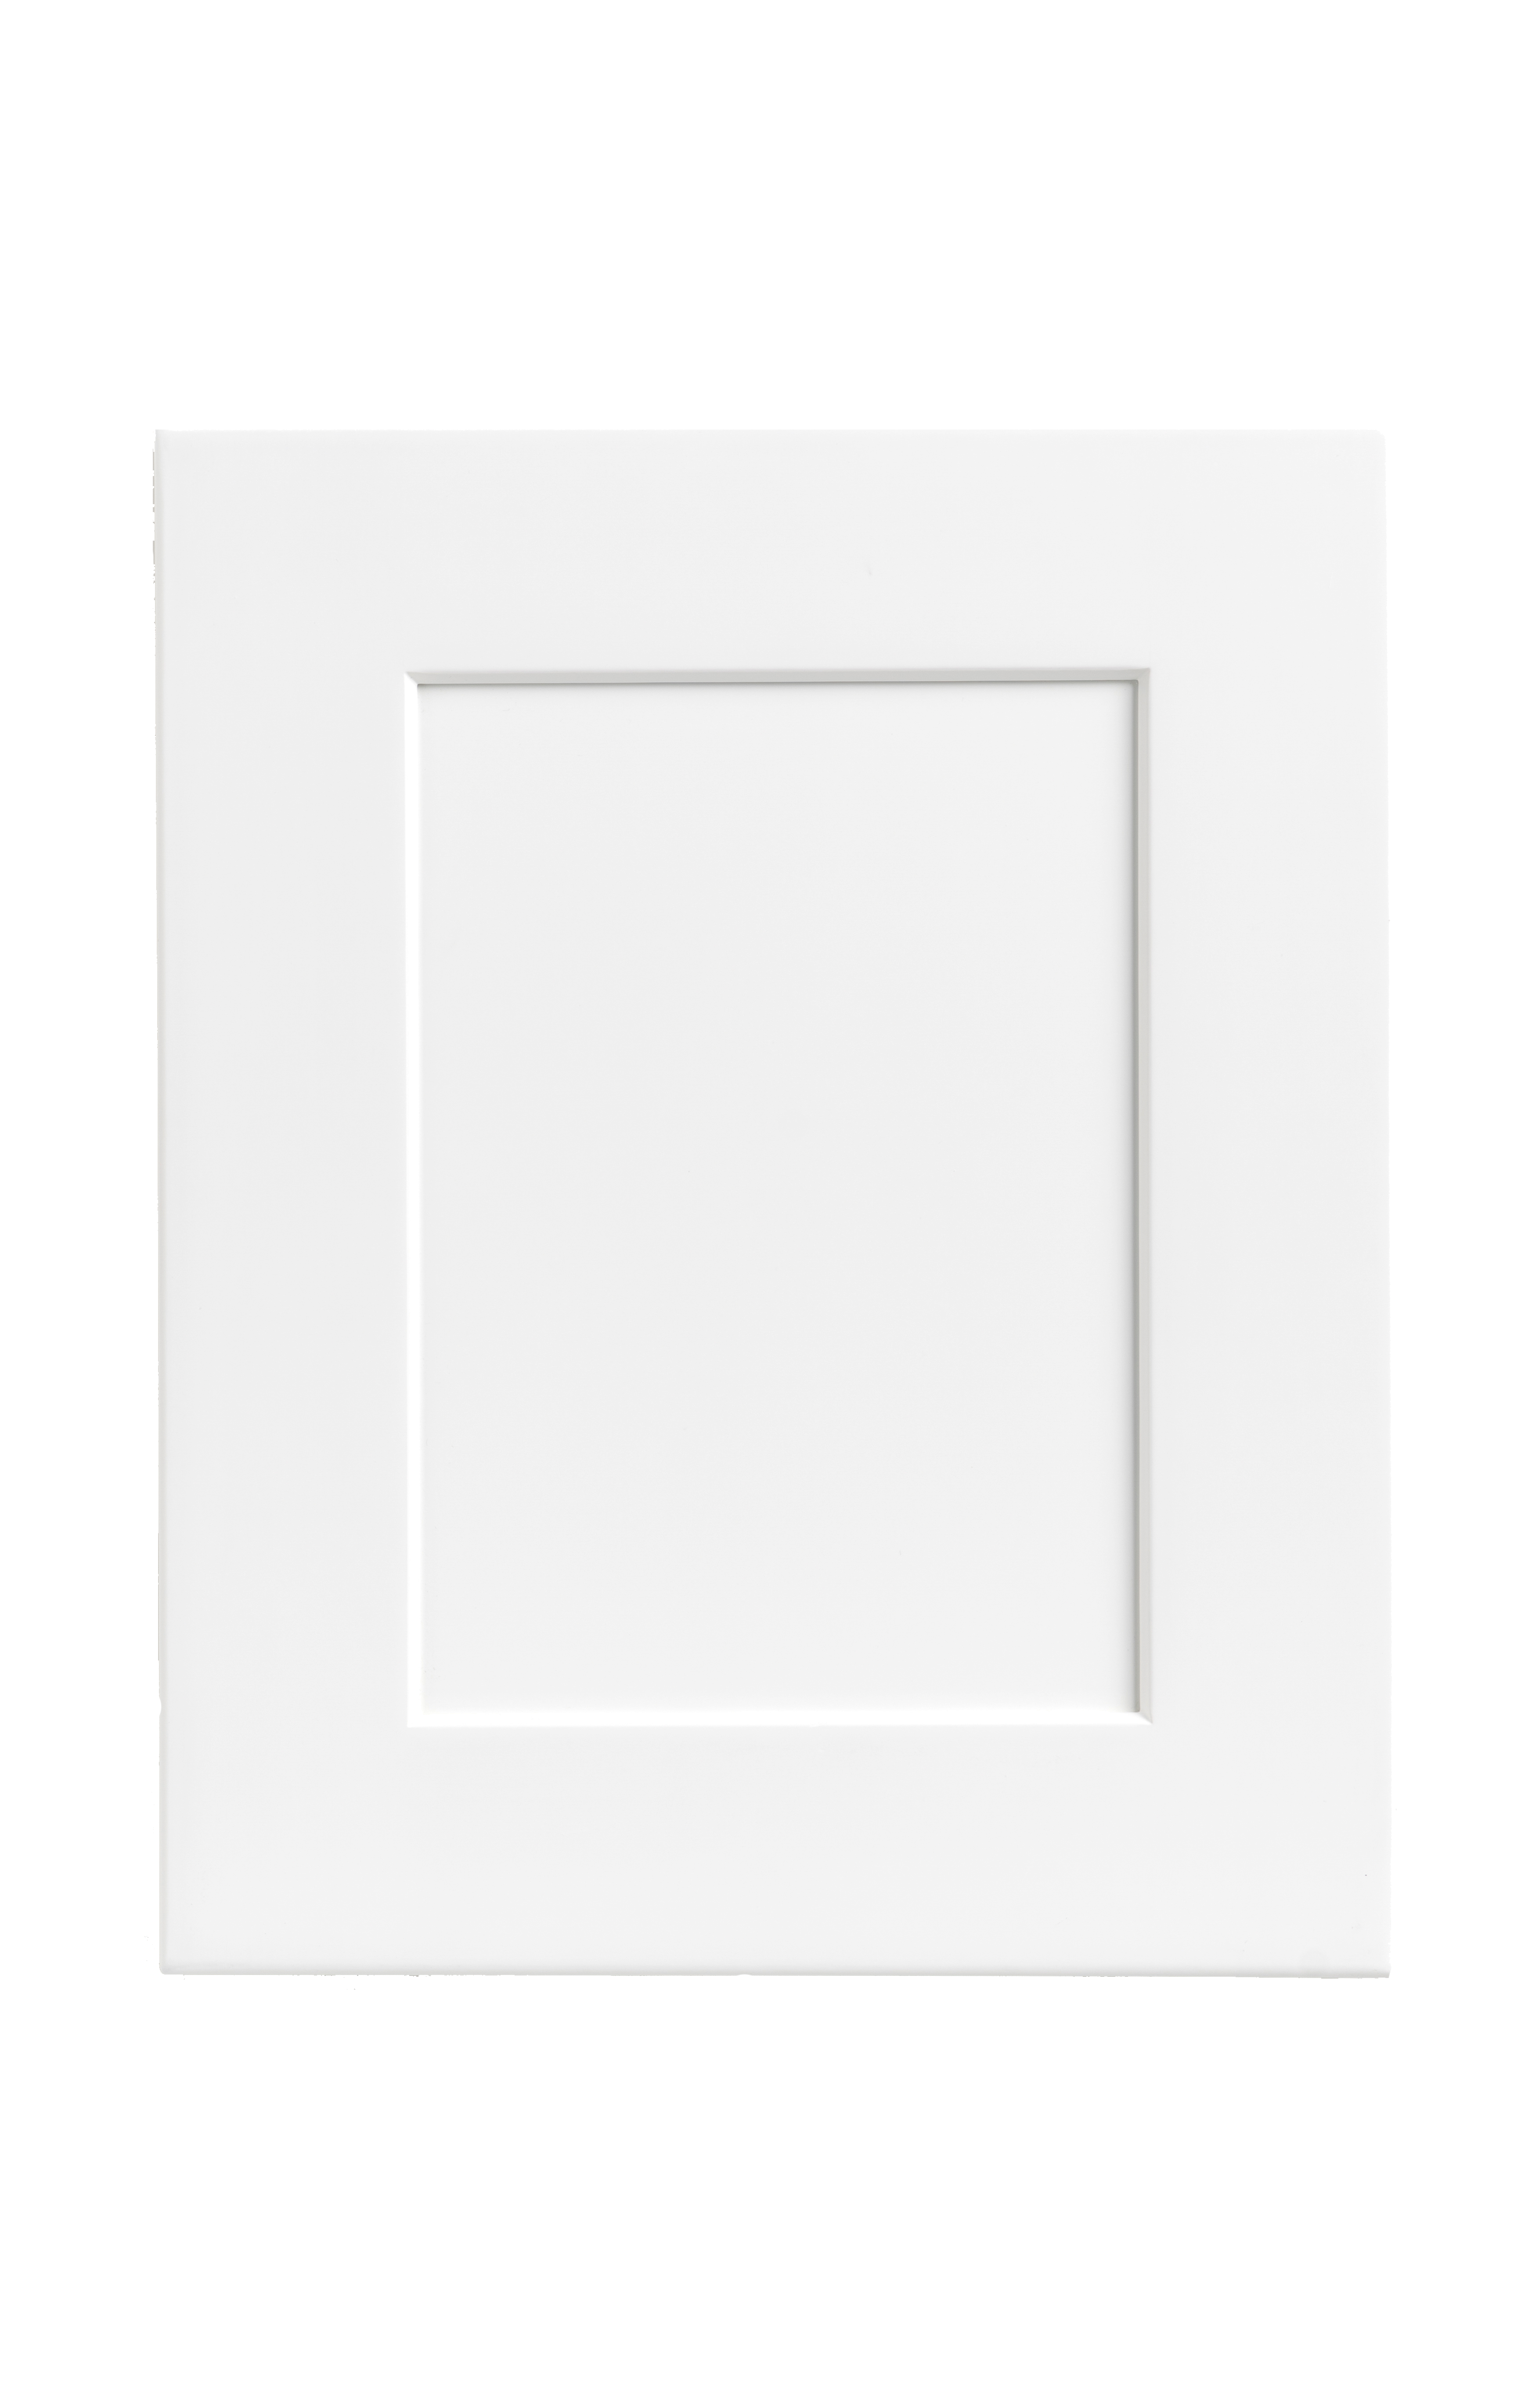 Sample Door White 1-1/4" Overlay Shaker